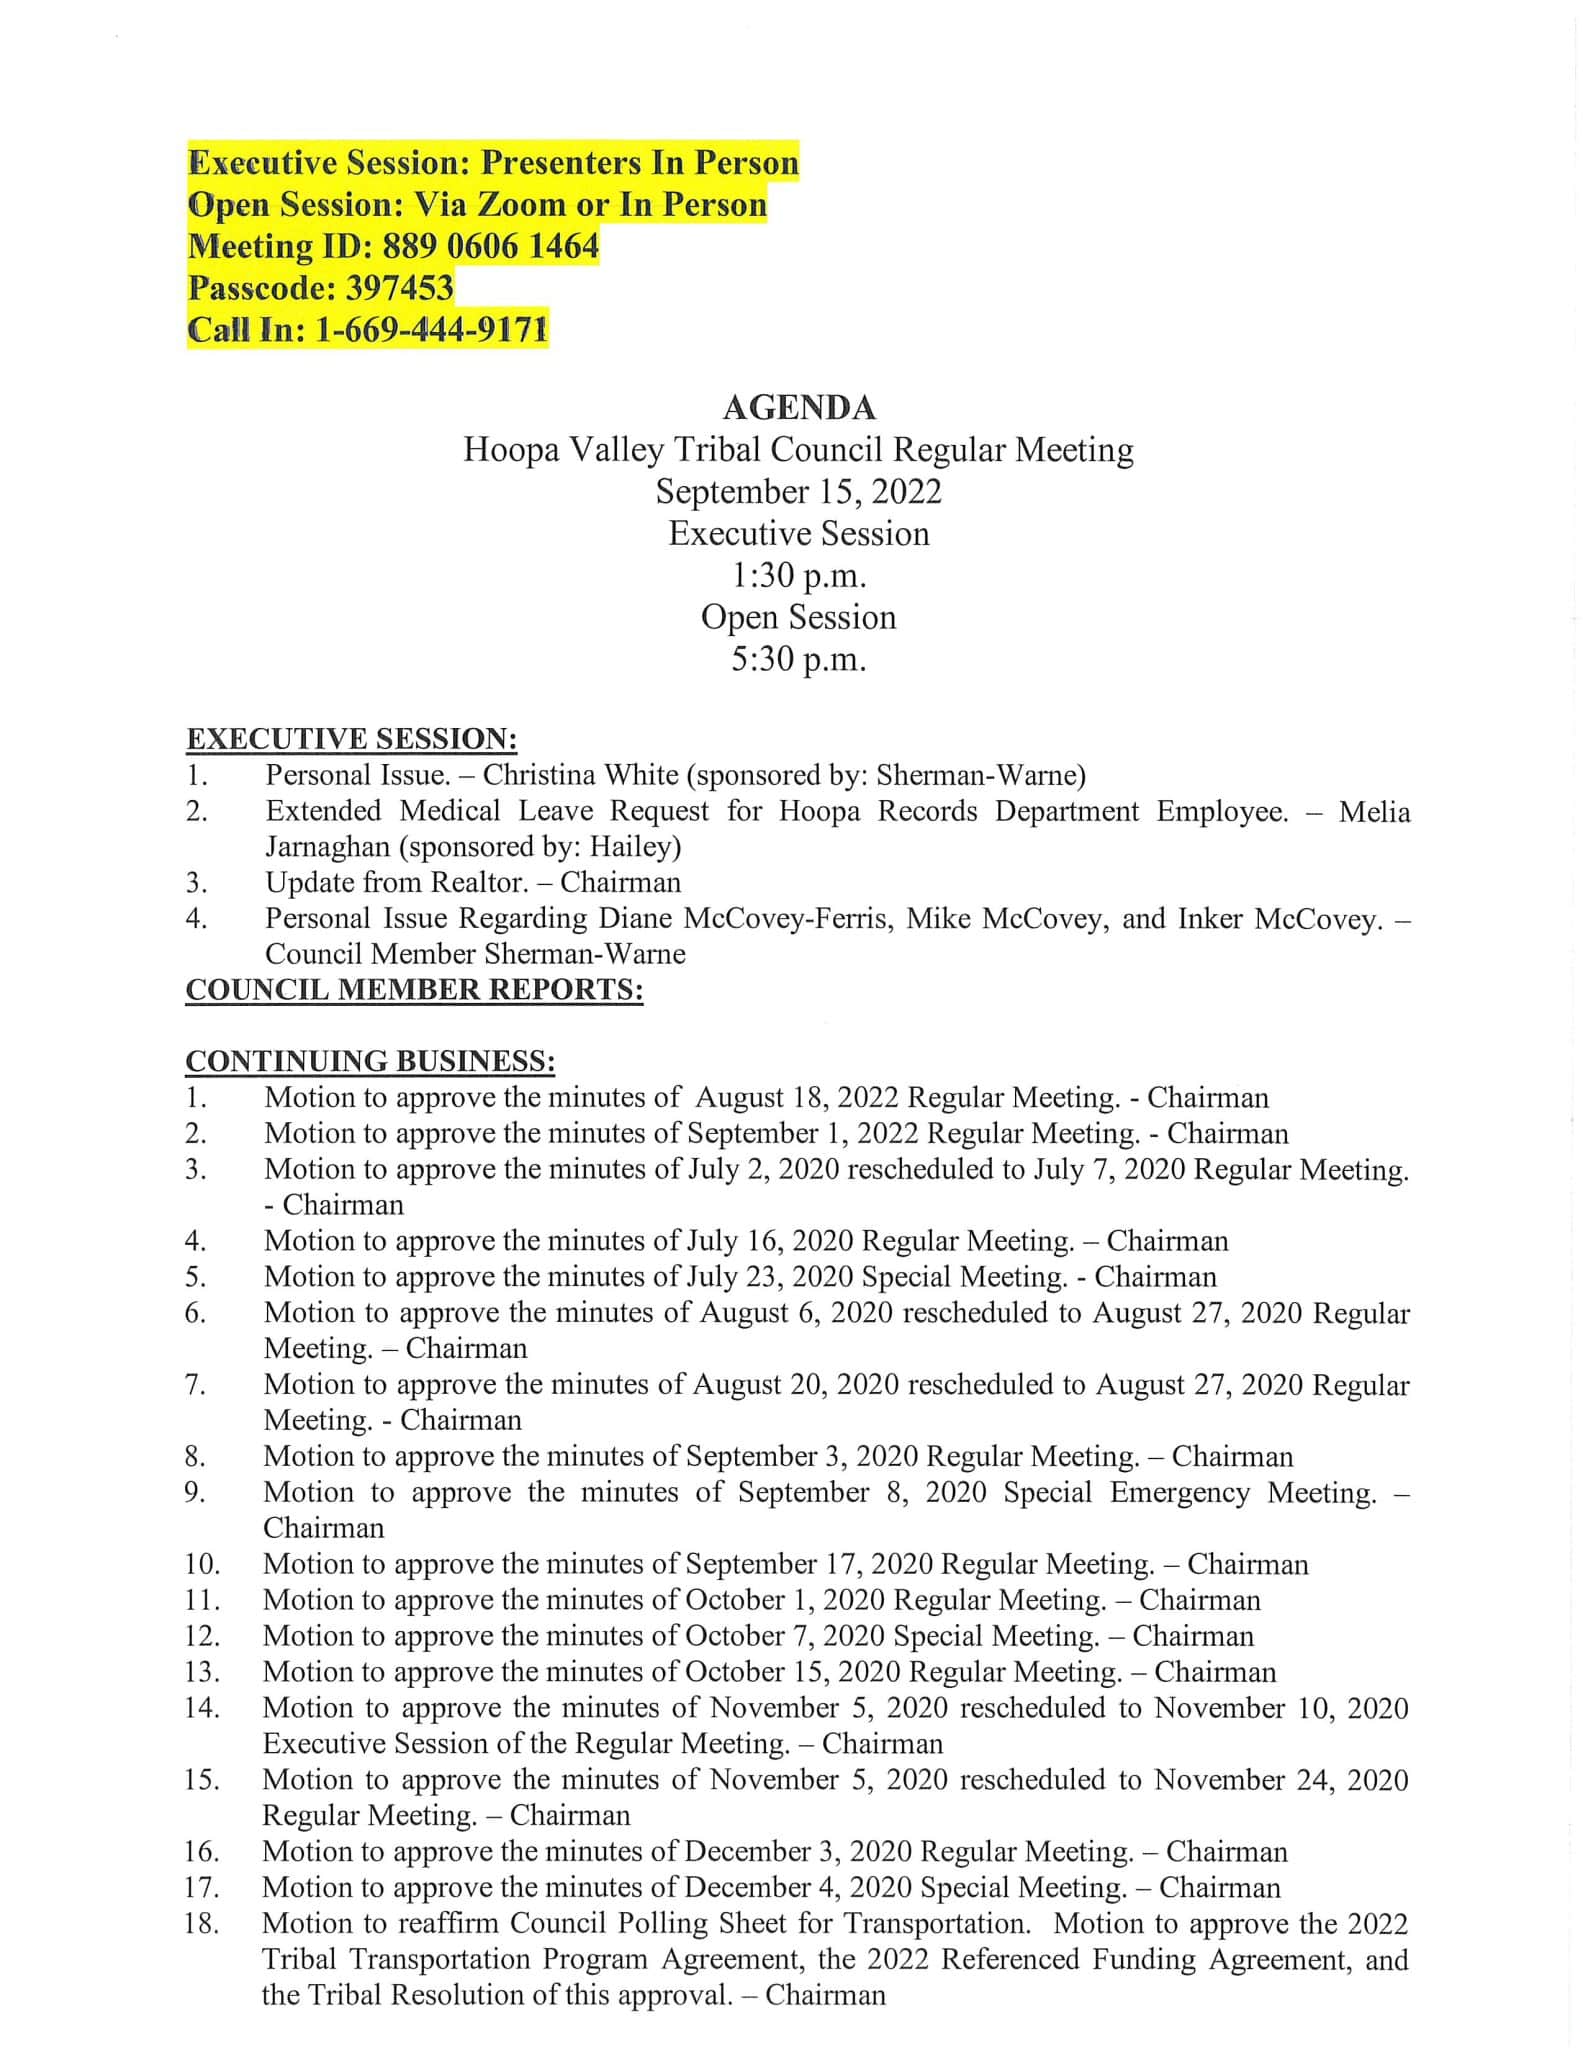 9/15/2022 Meeting Agenda | Hoopa Valley Tribe